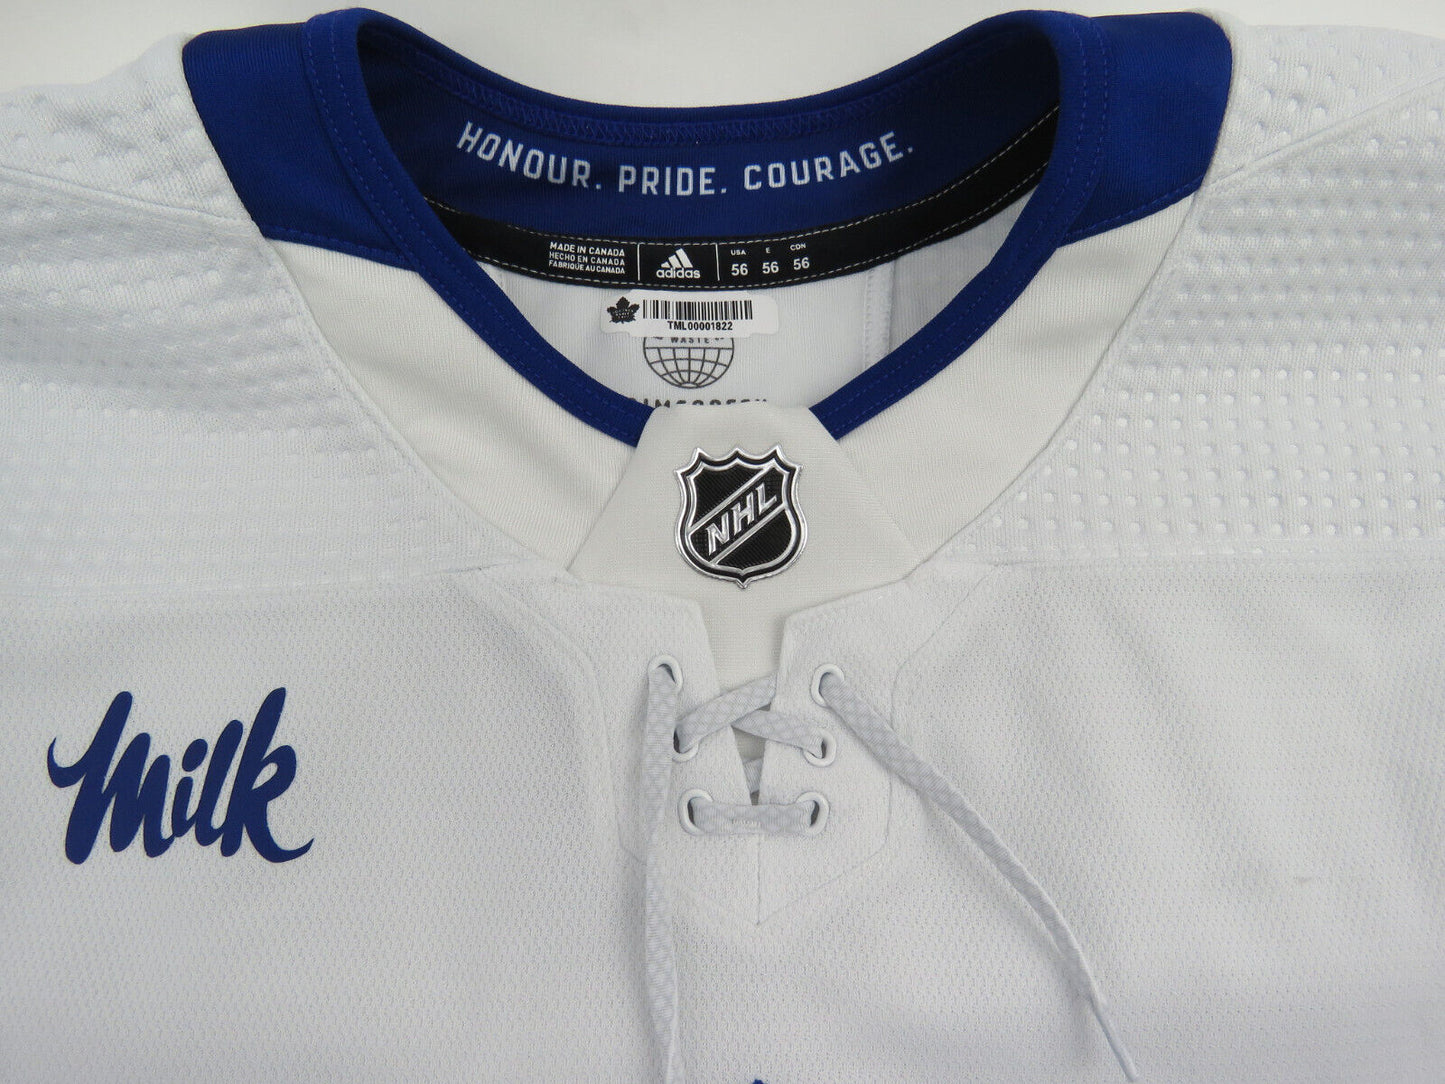 Game Worn Toronto Maple Leafs Authentic Pro Stock NHL Hockey Jersey 56 KAMPH